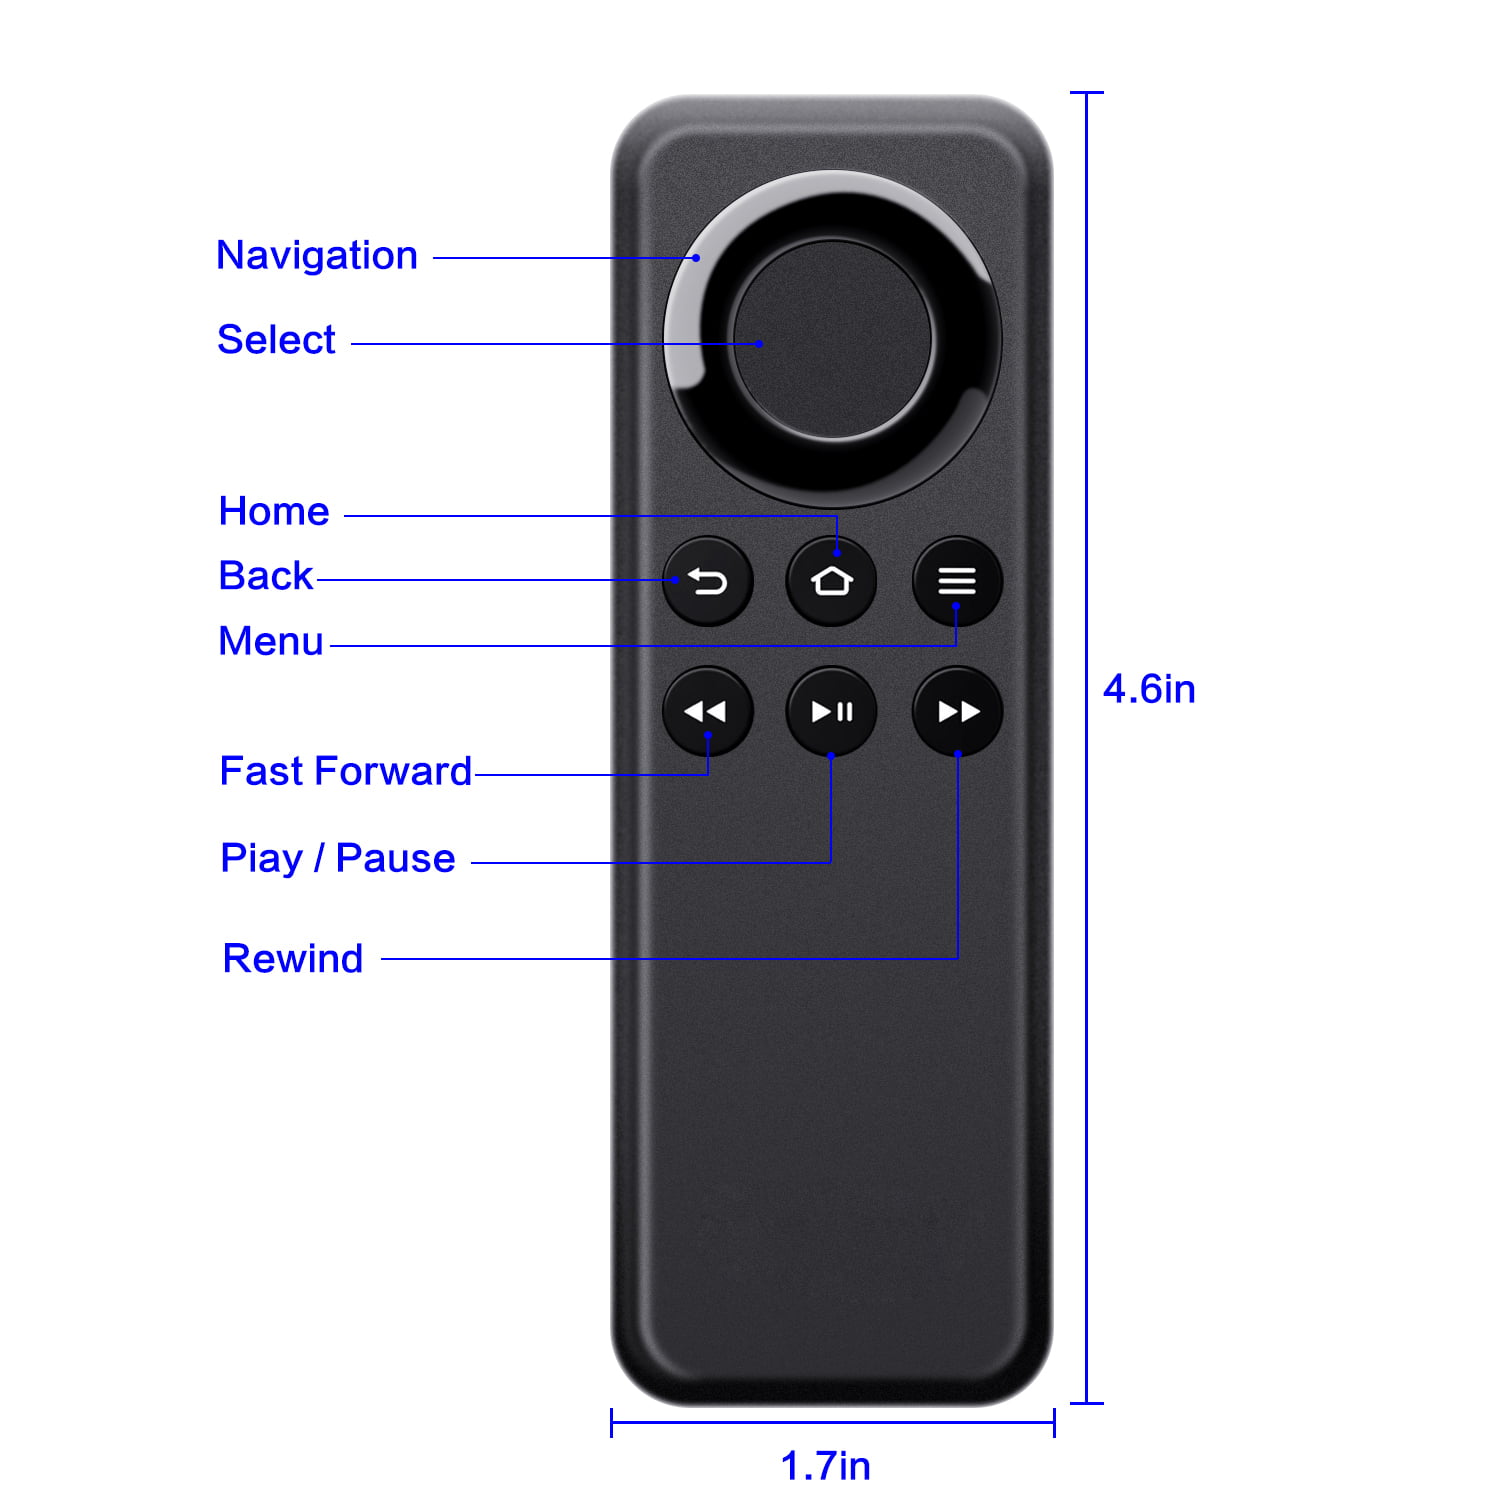 New Cv98lm Remote Control Replacement For Amazon Fire Tv Stick Walmart Com Walmart Com